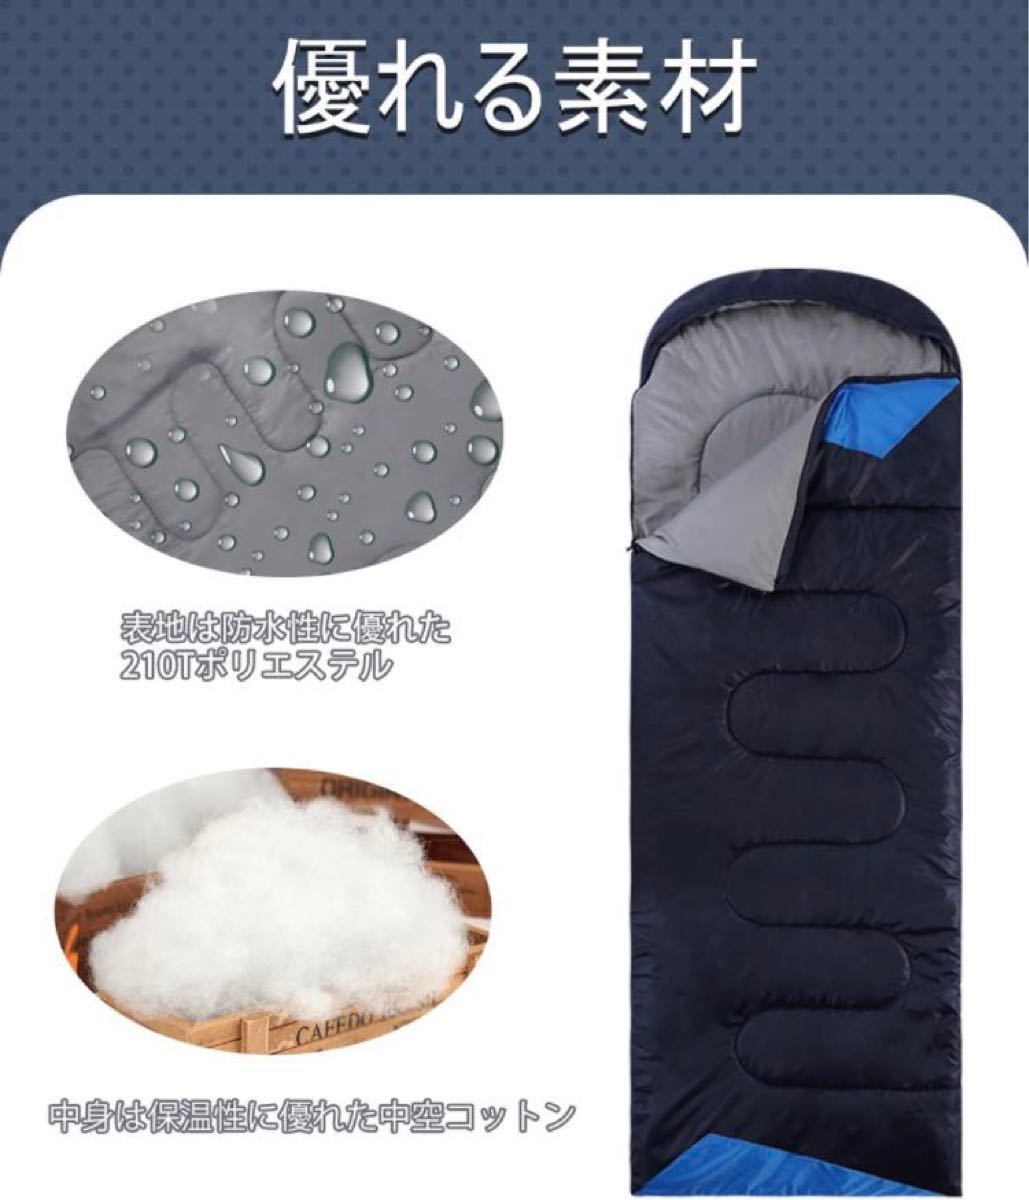 封筒型寝袋 軽量 保温 防水 簡単収納シュラフ 1.35kg 春夏秋